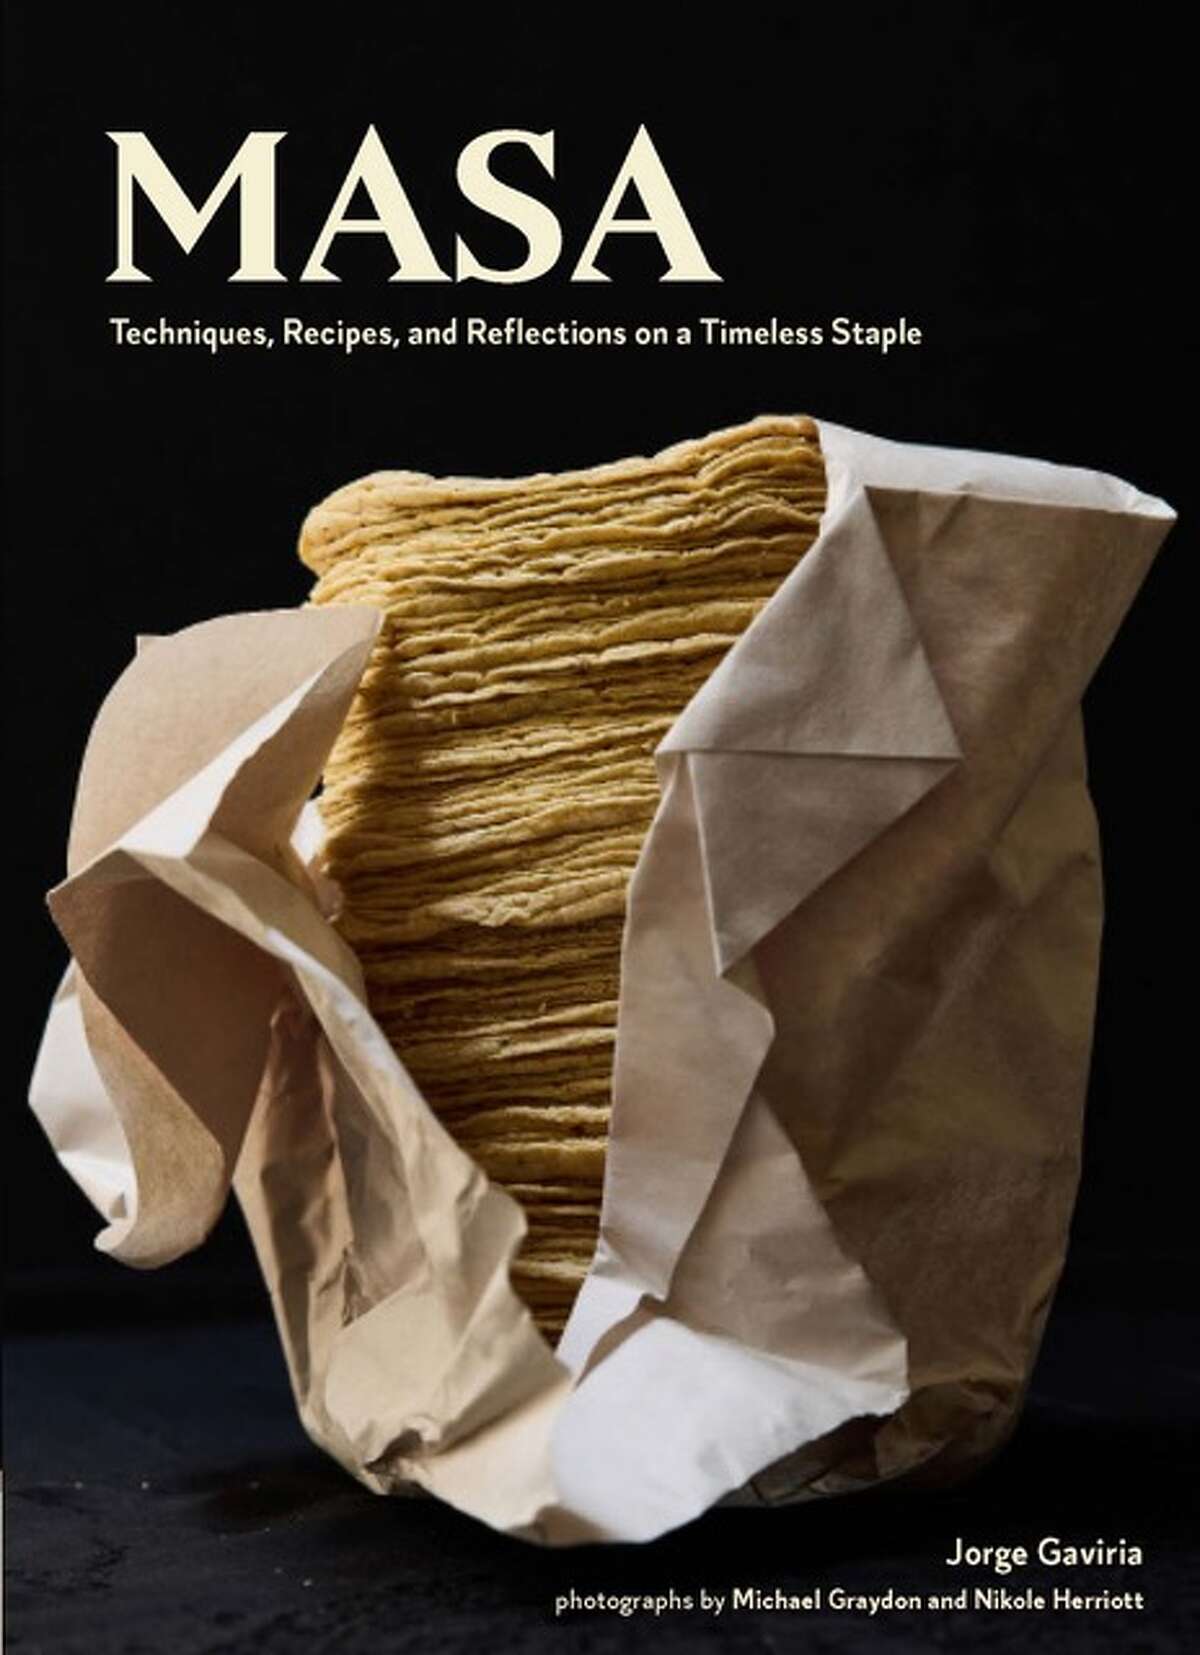 Cover of "Masa" by Jorge Gaviria.